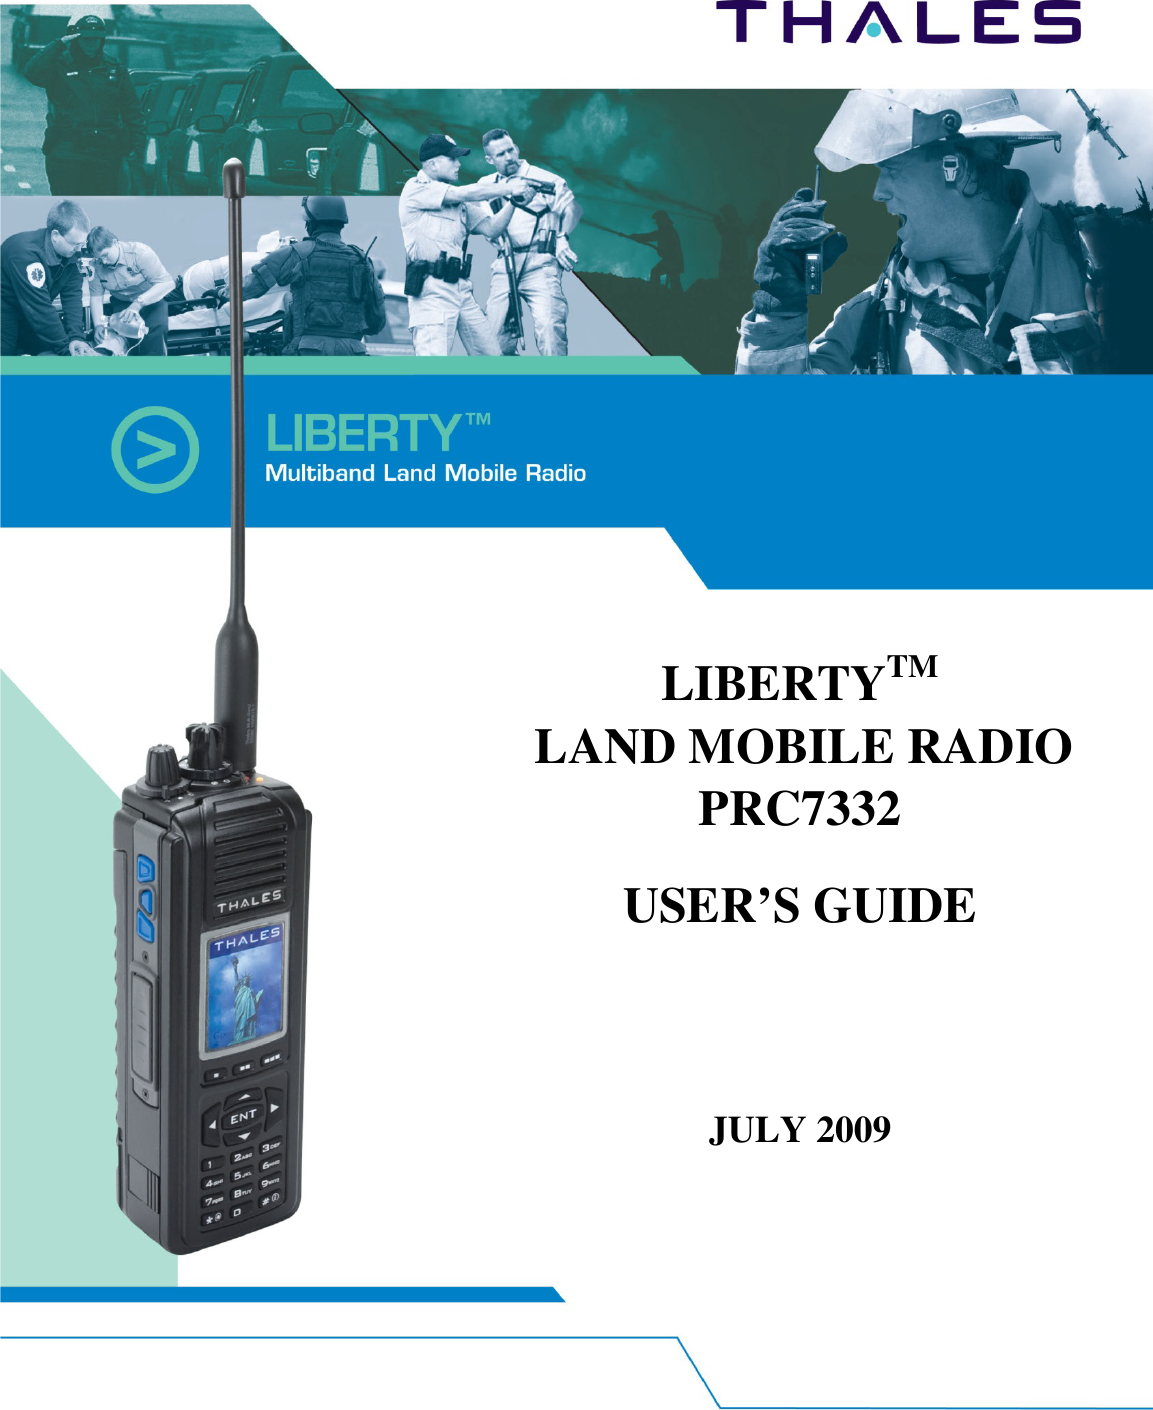      LIBERTYTM  LAND MOBILE RADIO PRC7332  USER’S GUIDE      JULY 2009 